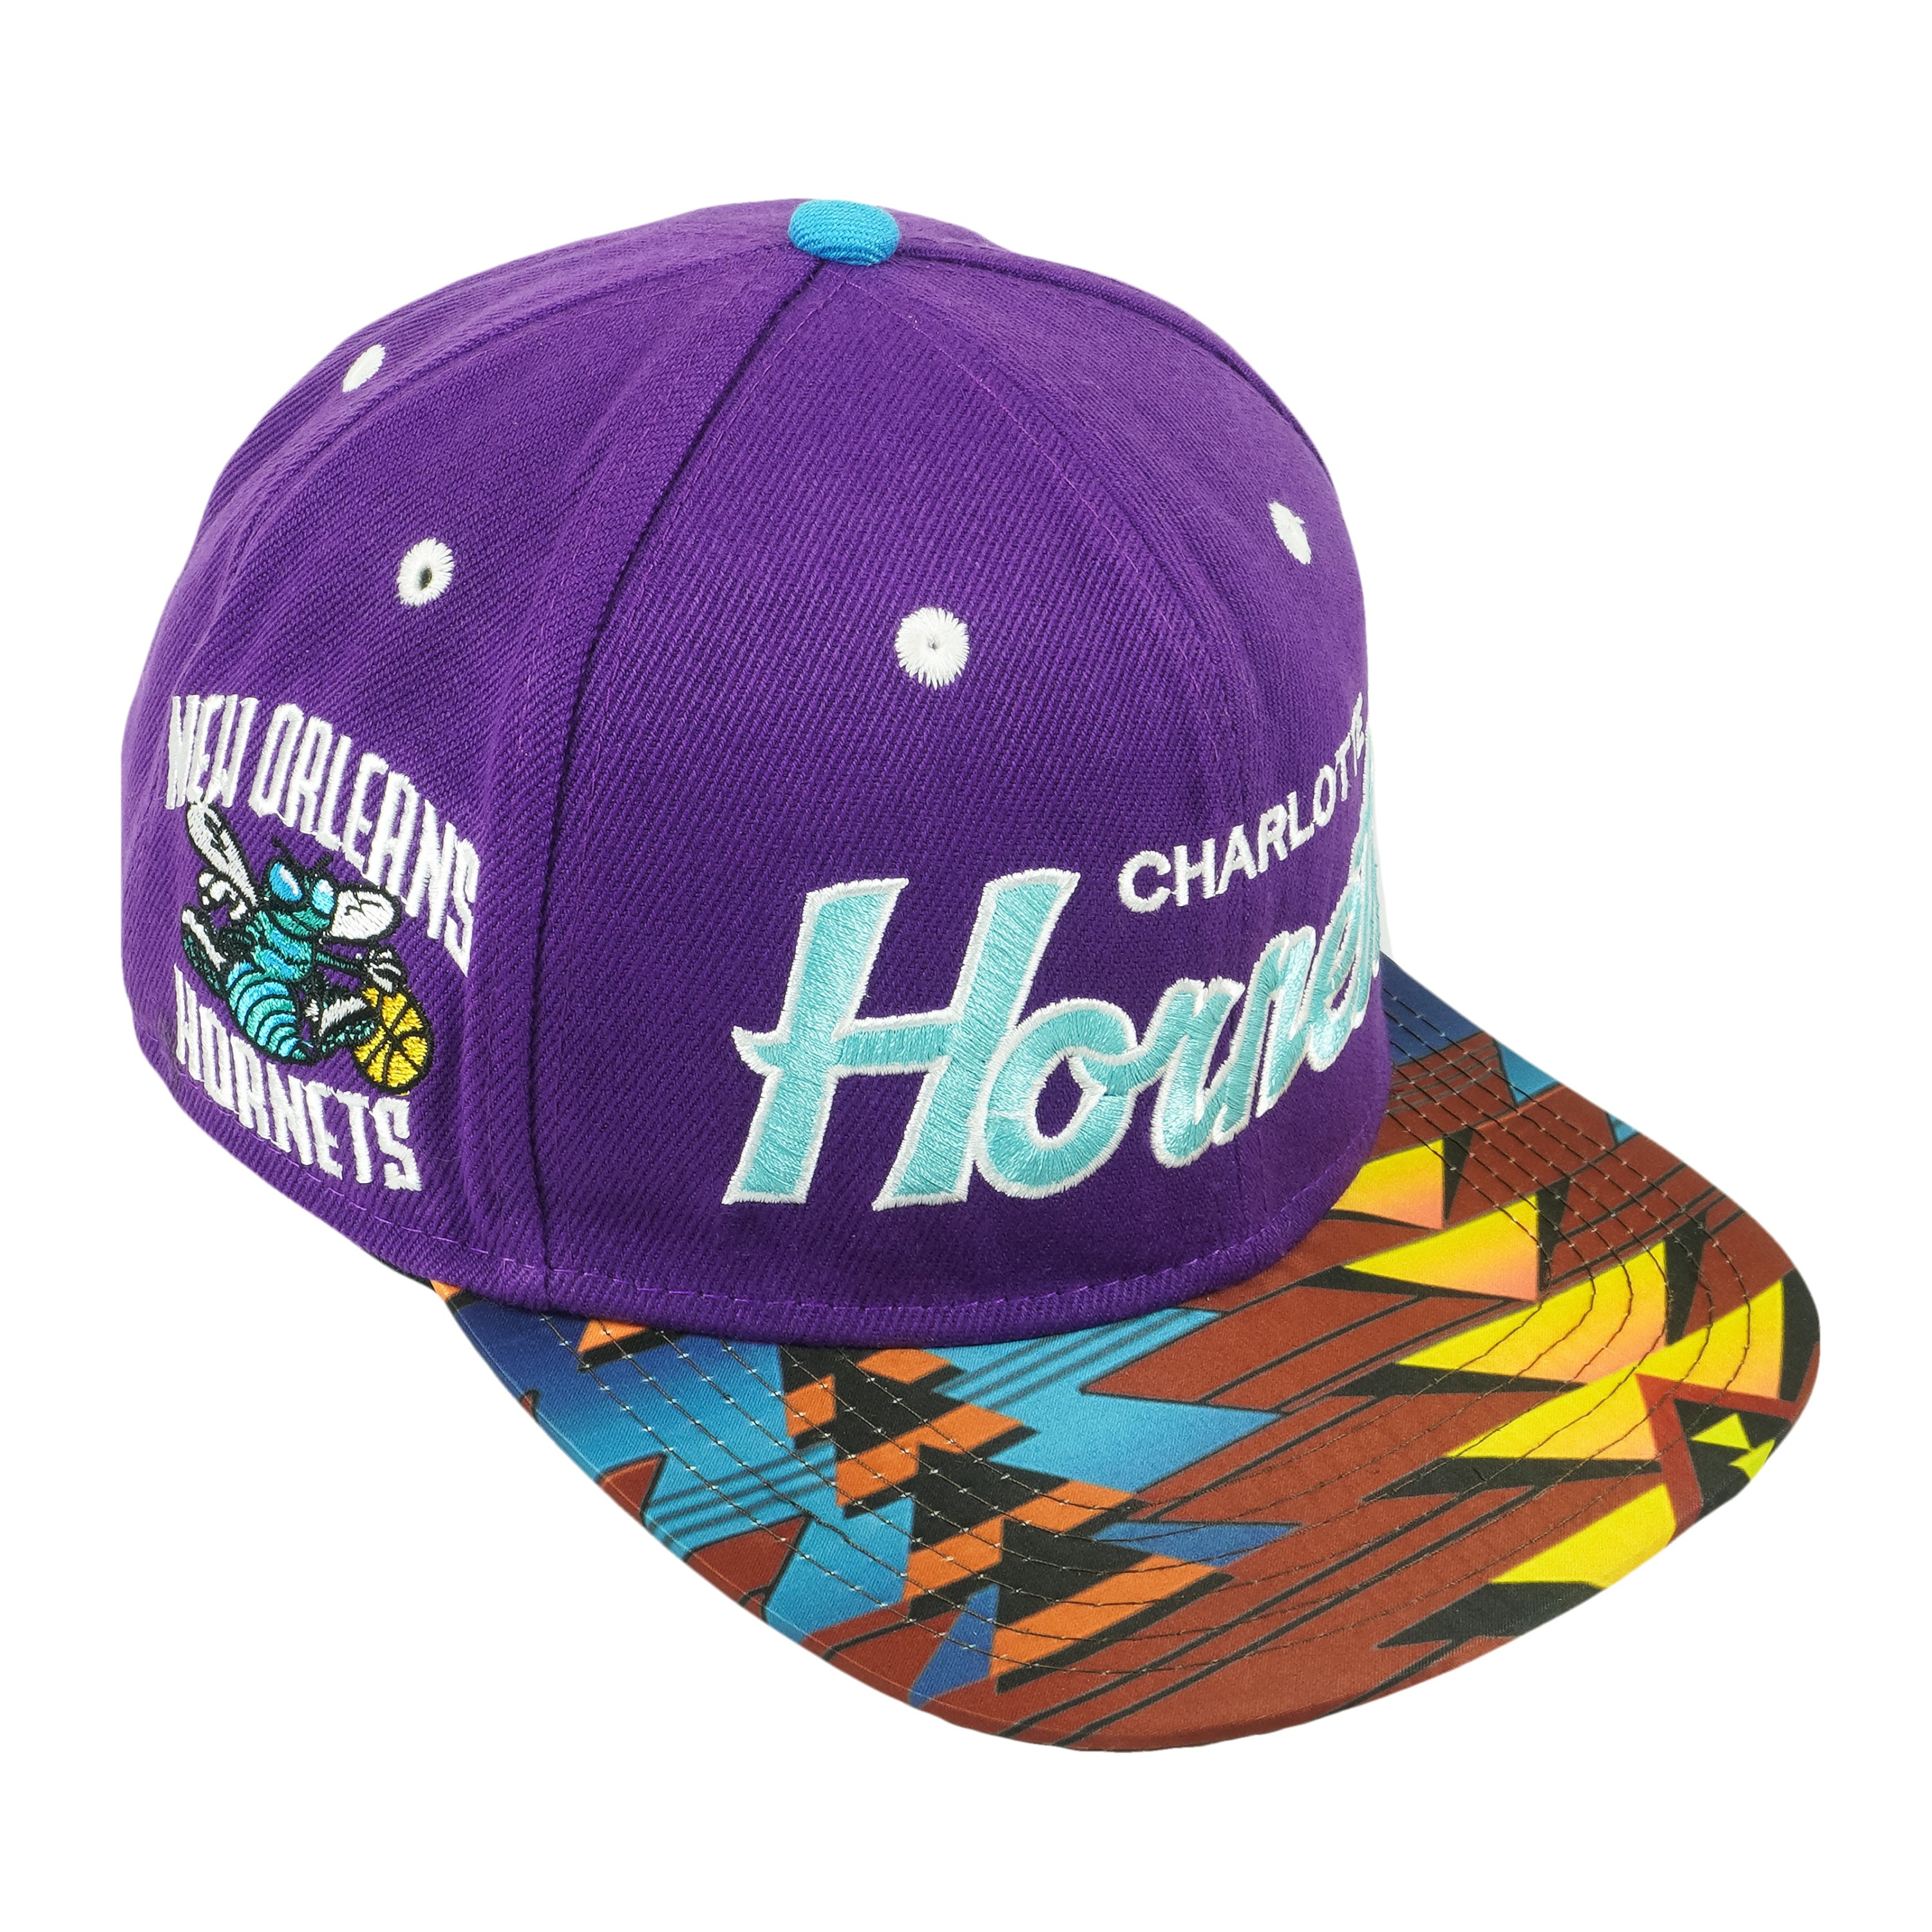 Vintage New Era Hat Basketball Snapback Charlotte Hornets Hardwood Classics